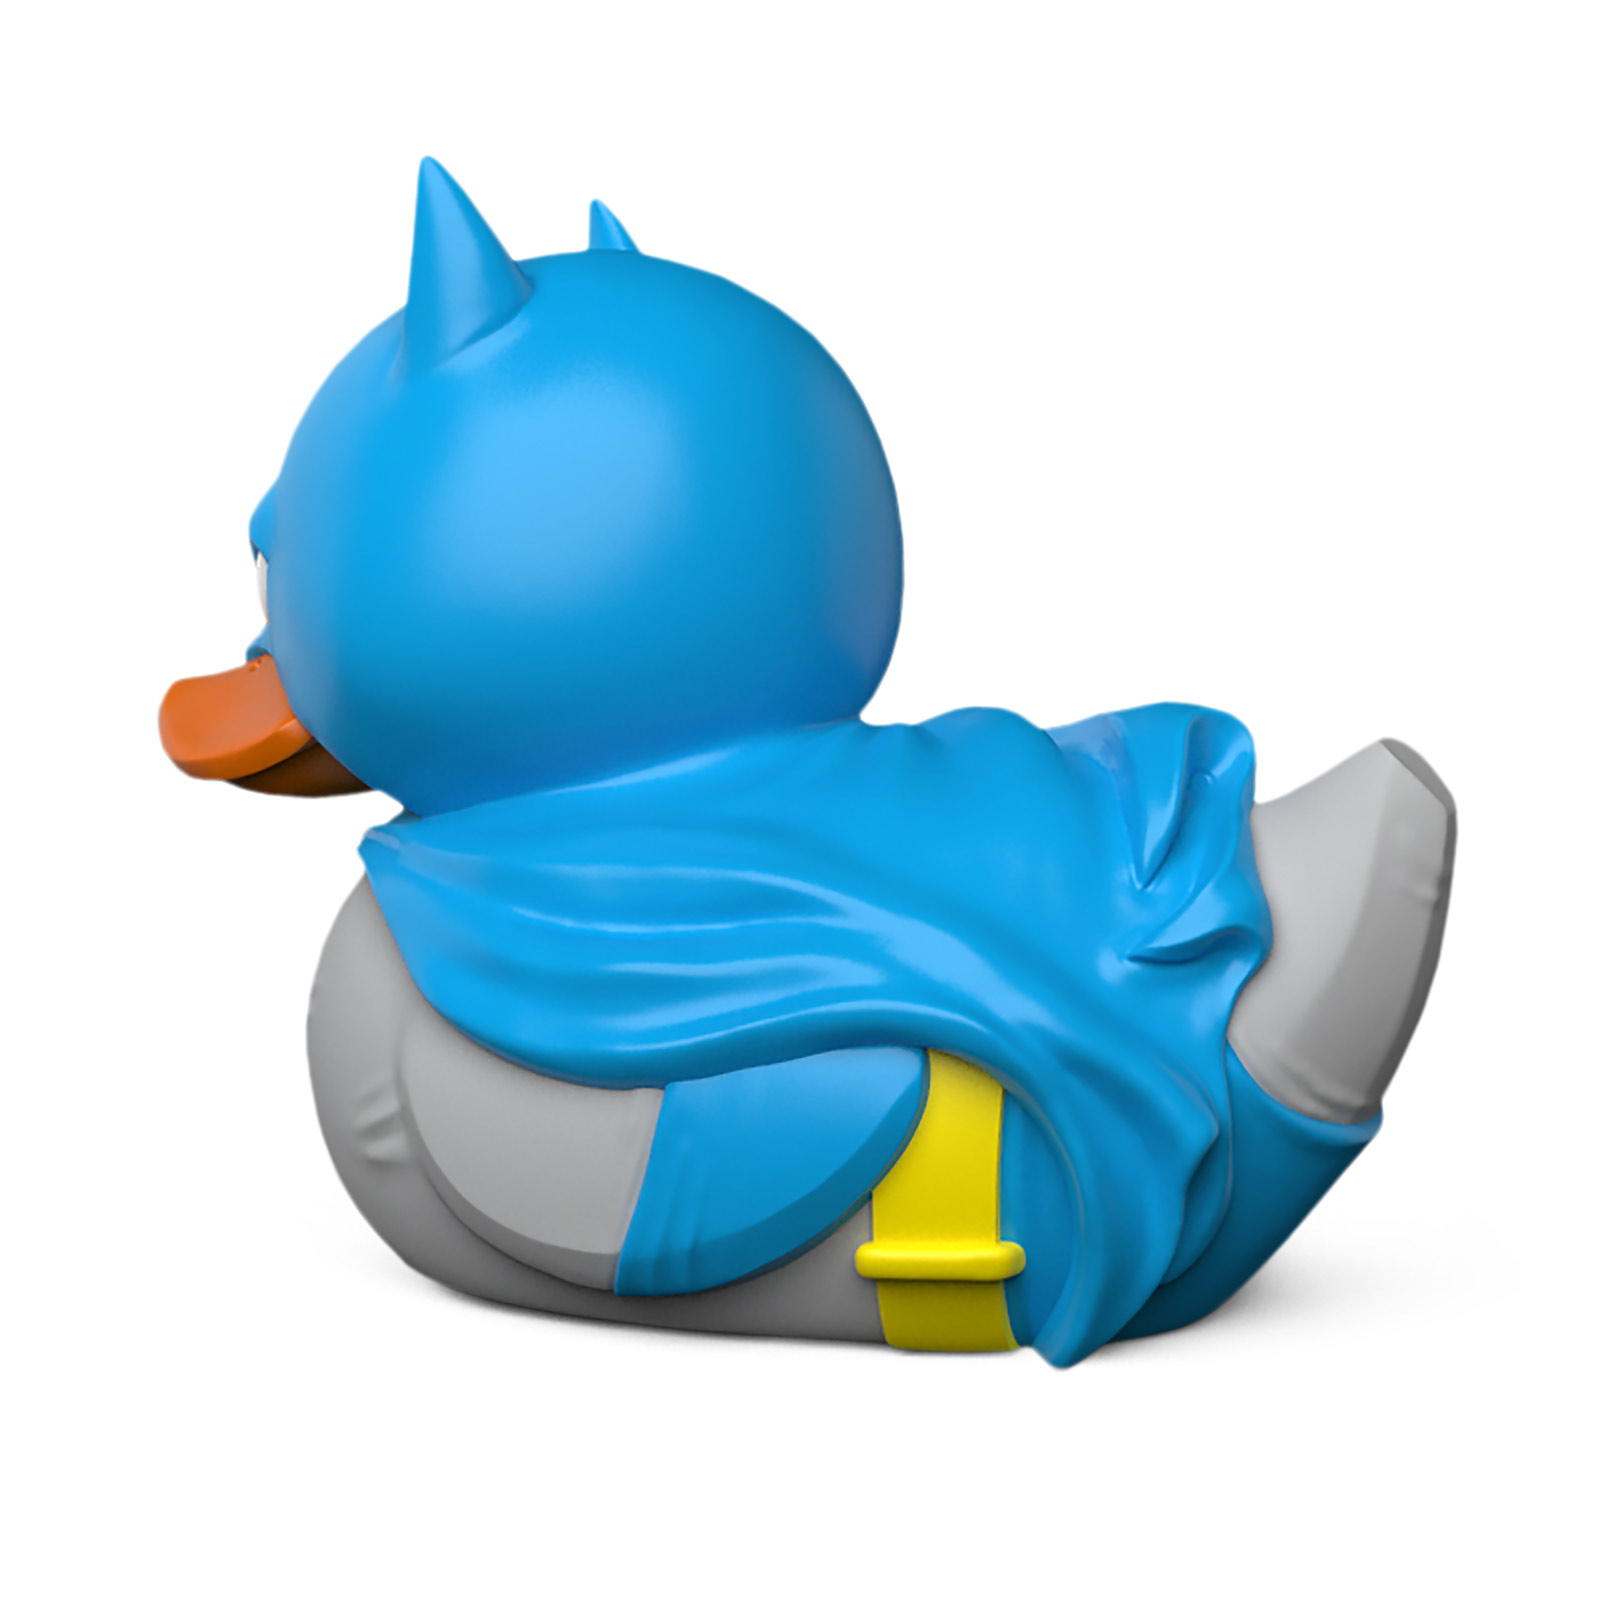 Batman TUBBZ Decorative Duck